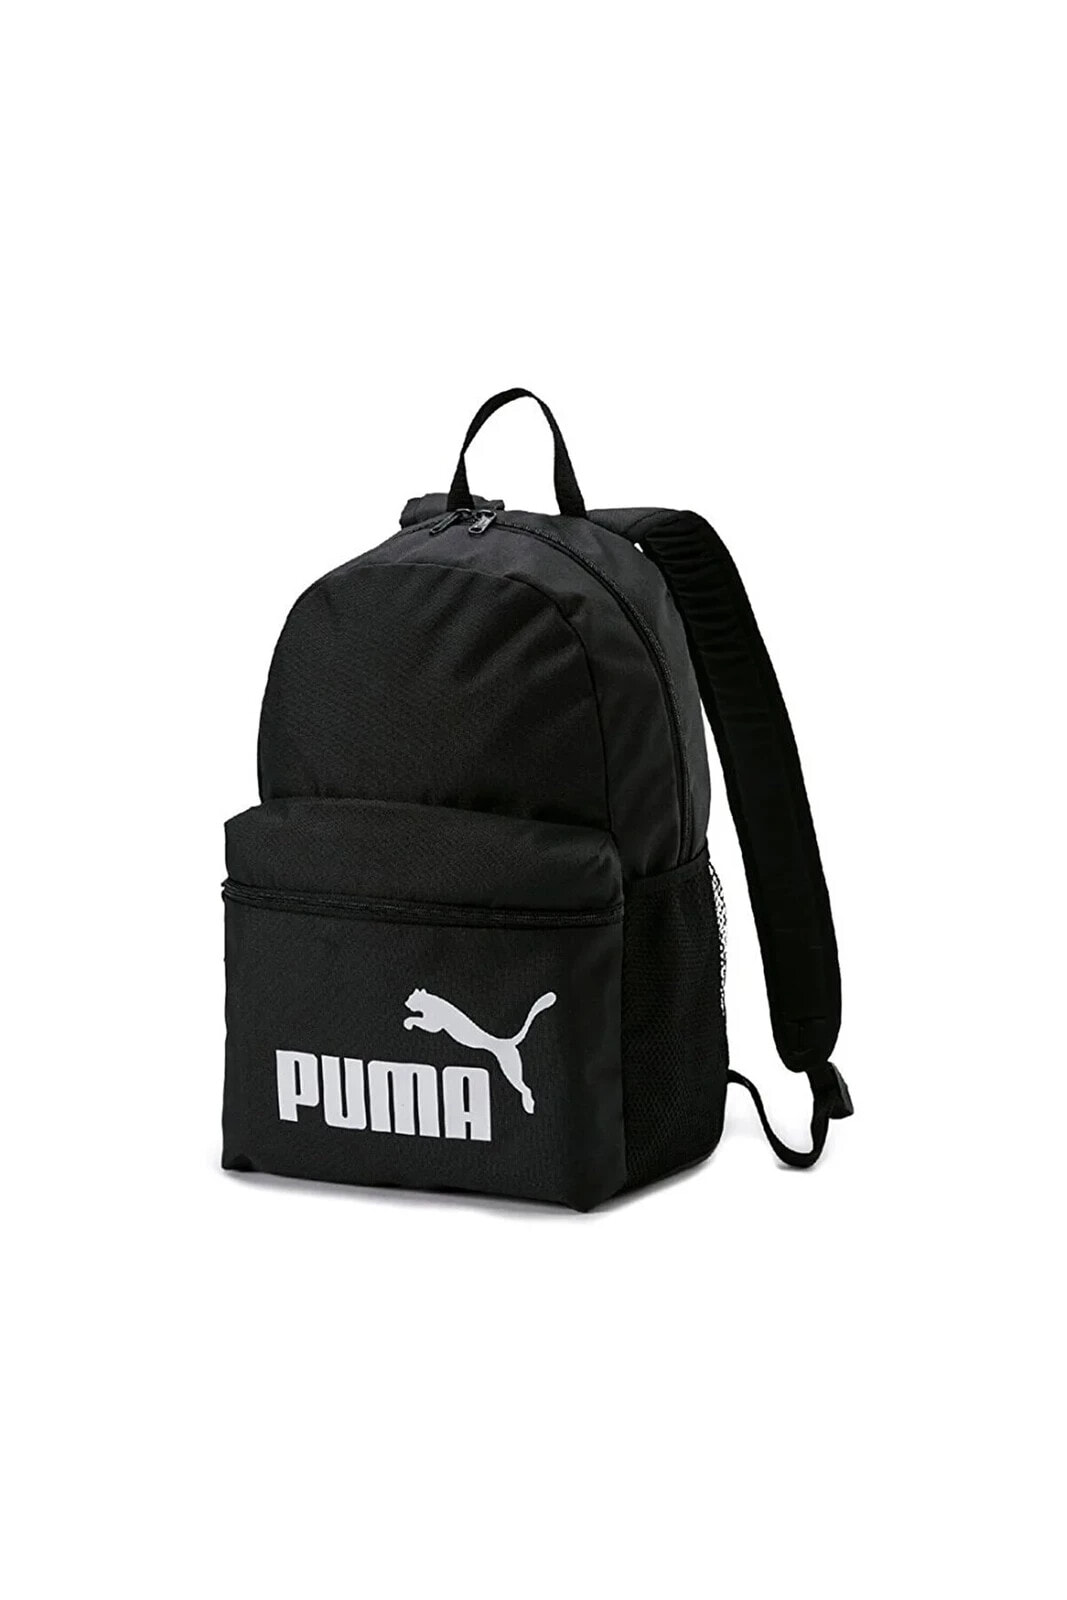 Phase Backpack - Unisex Fuşya Sırt Çantası 44x30x14